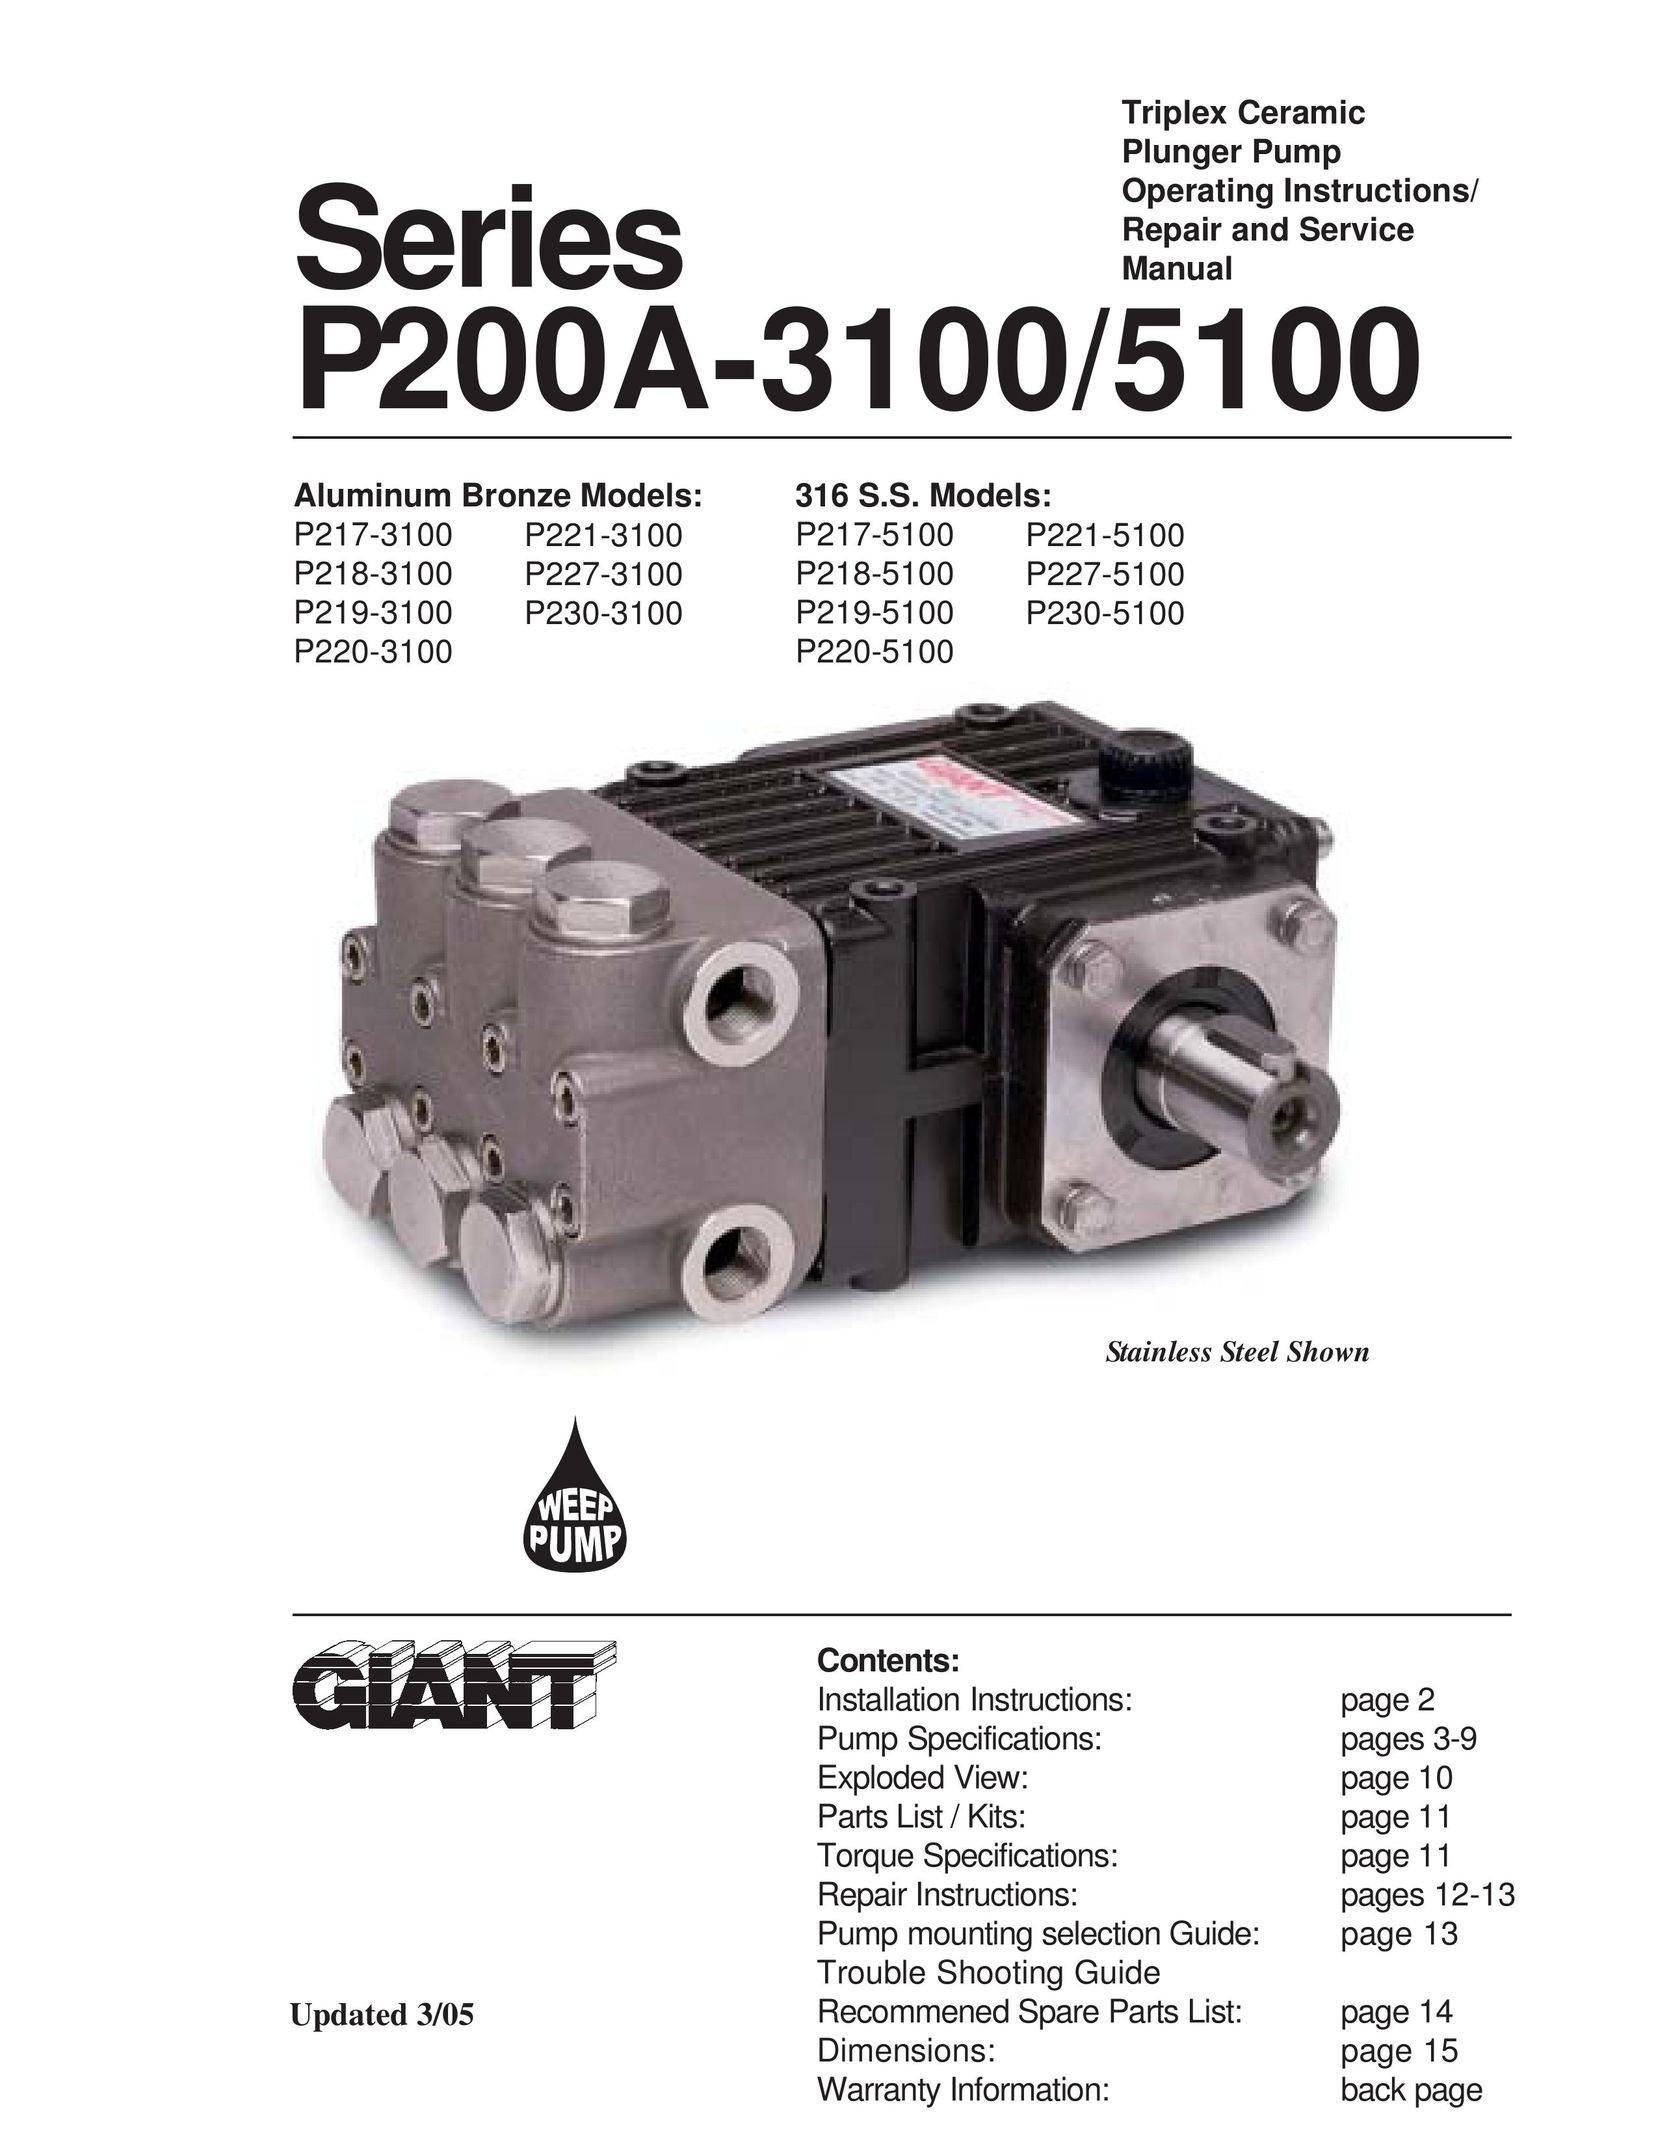 Giant P200A-5100 Heat Pump User Manual